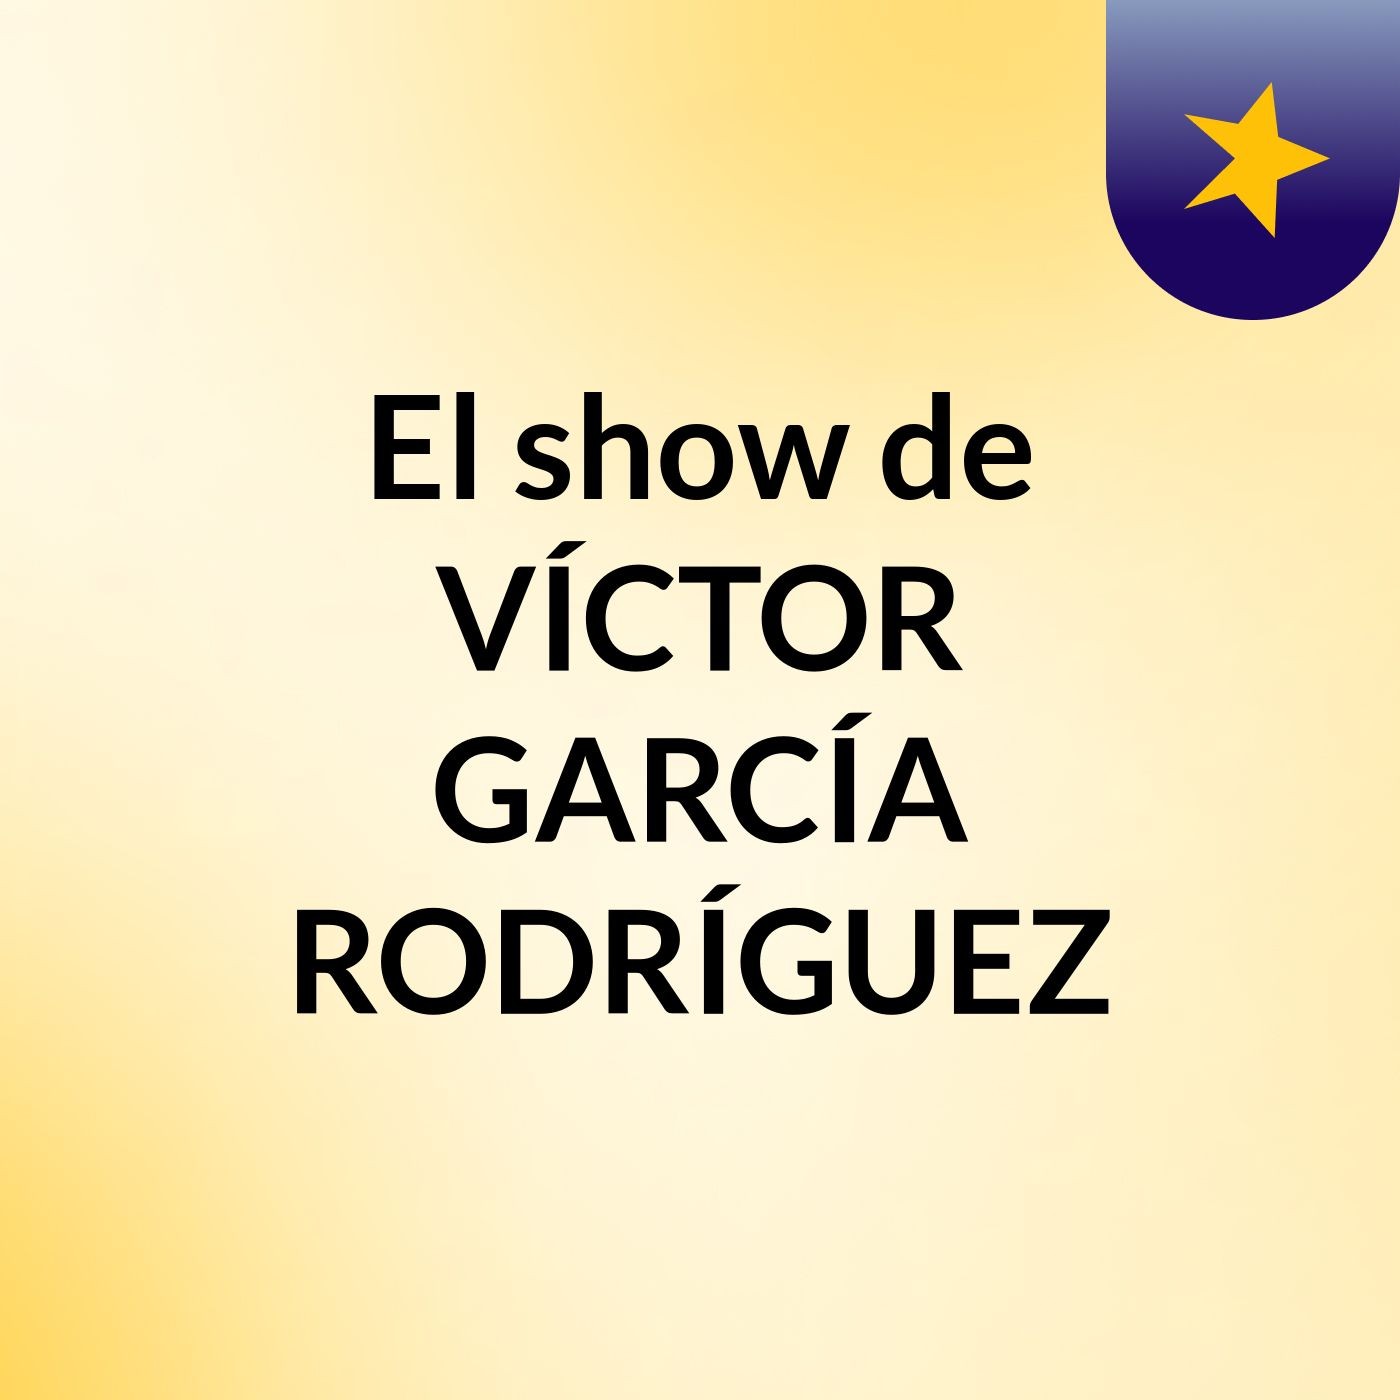 El show de VÍCTOR GARCÍA RODRÍGUEZ